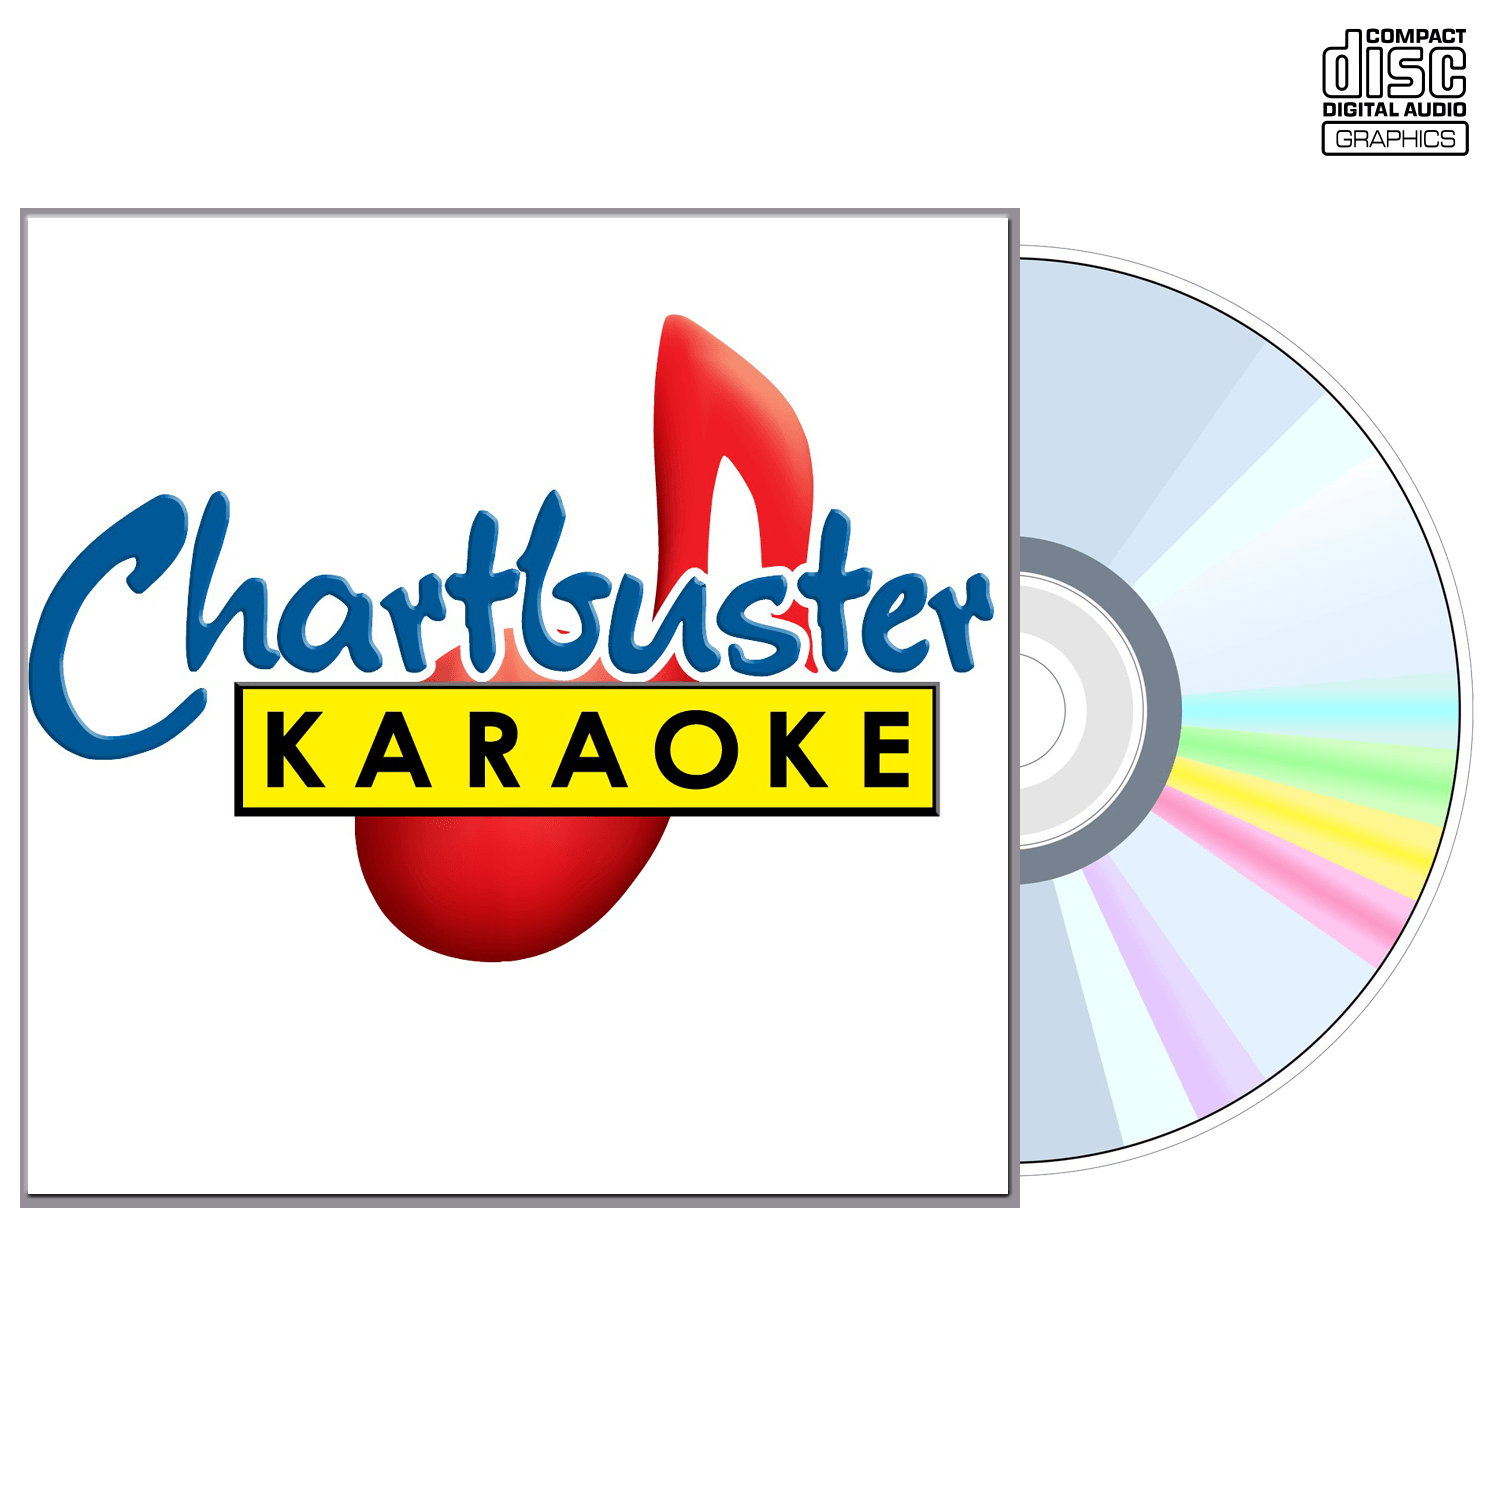 It’s A Girls Party - CD+G - Chartbuster Karaoke - Karaoke Home Entertainment